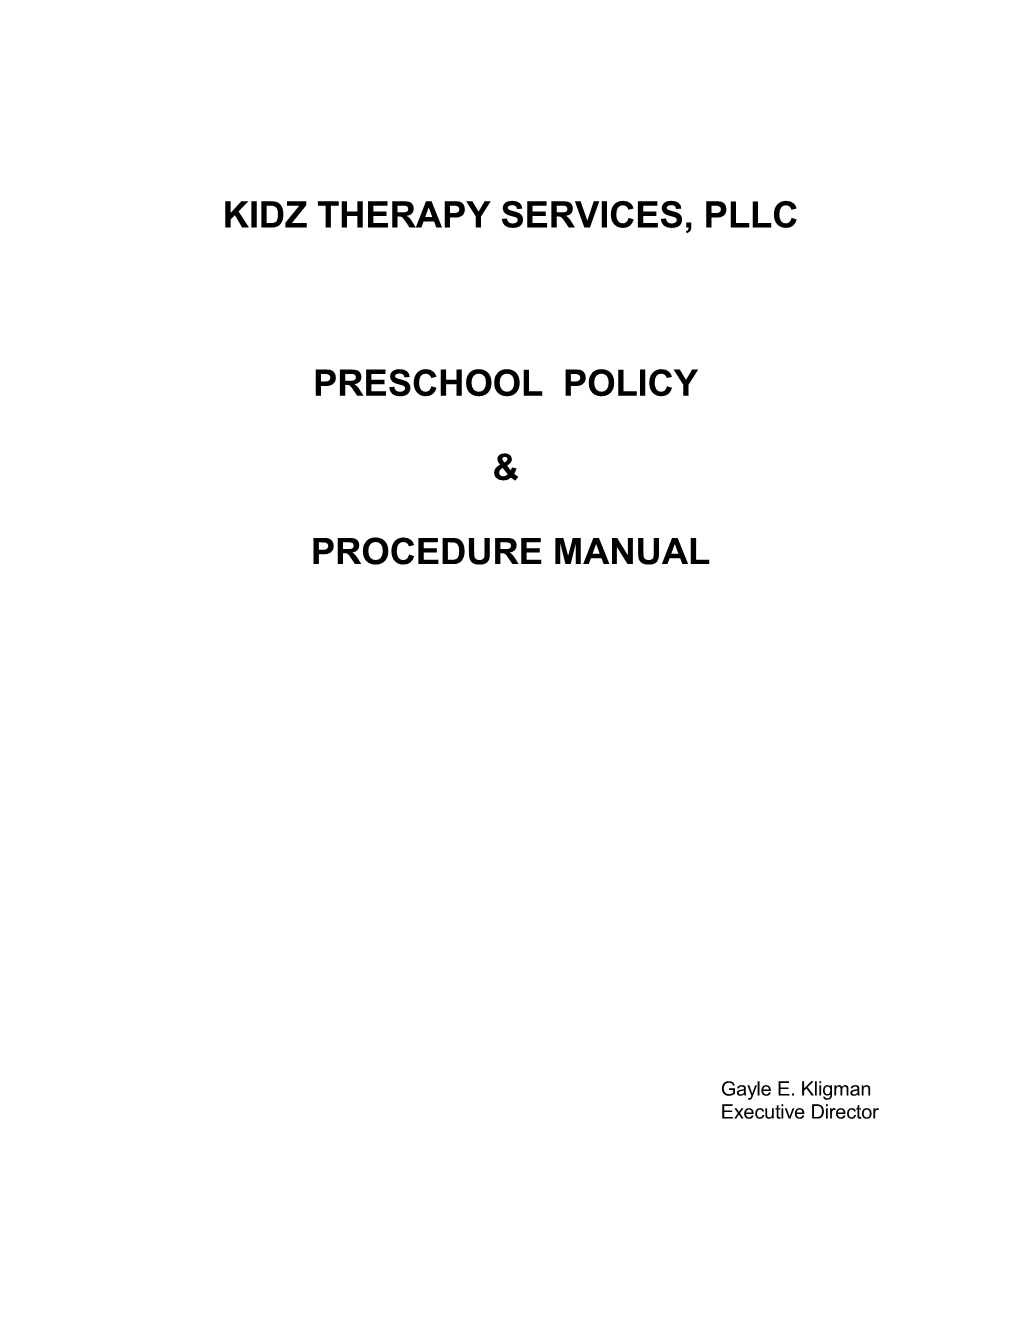 Kidz Therapy Services, Pllc